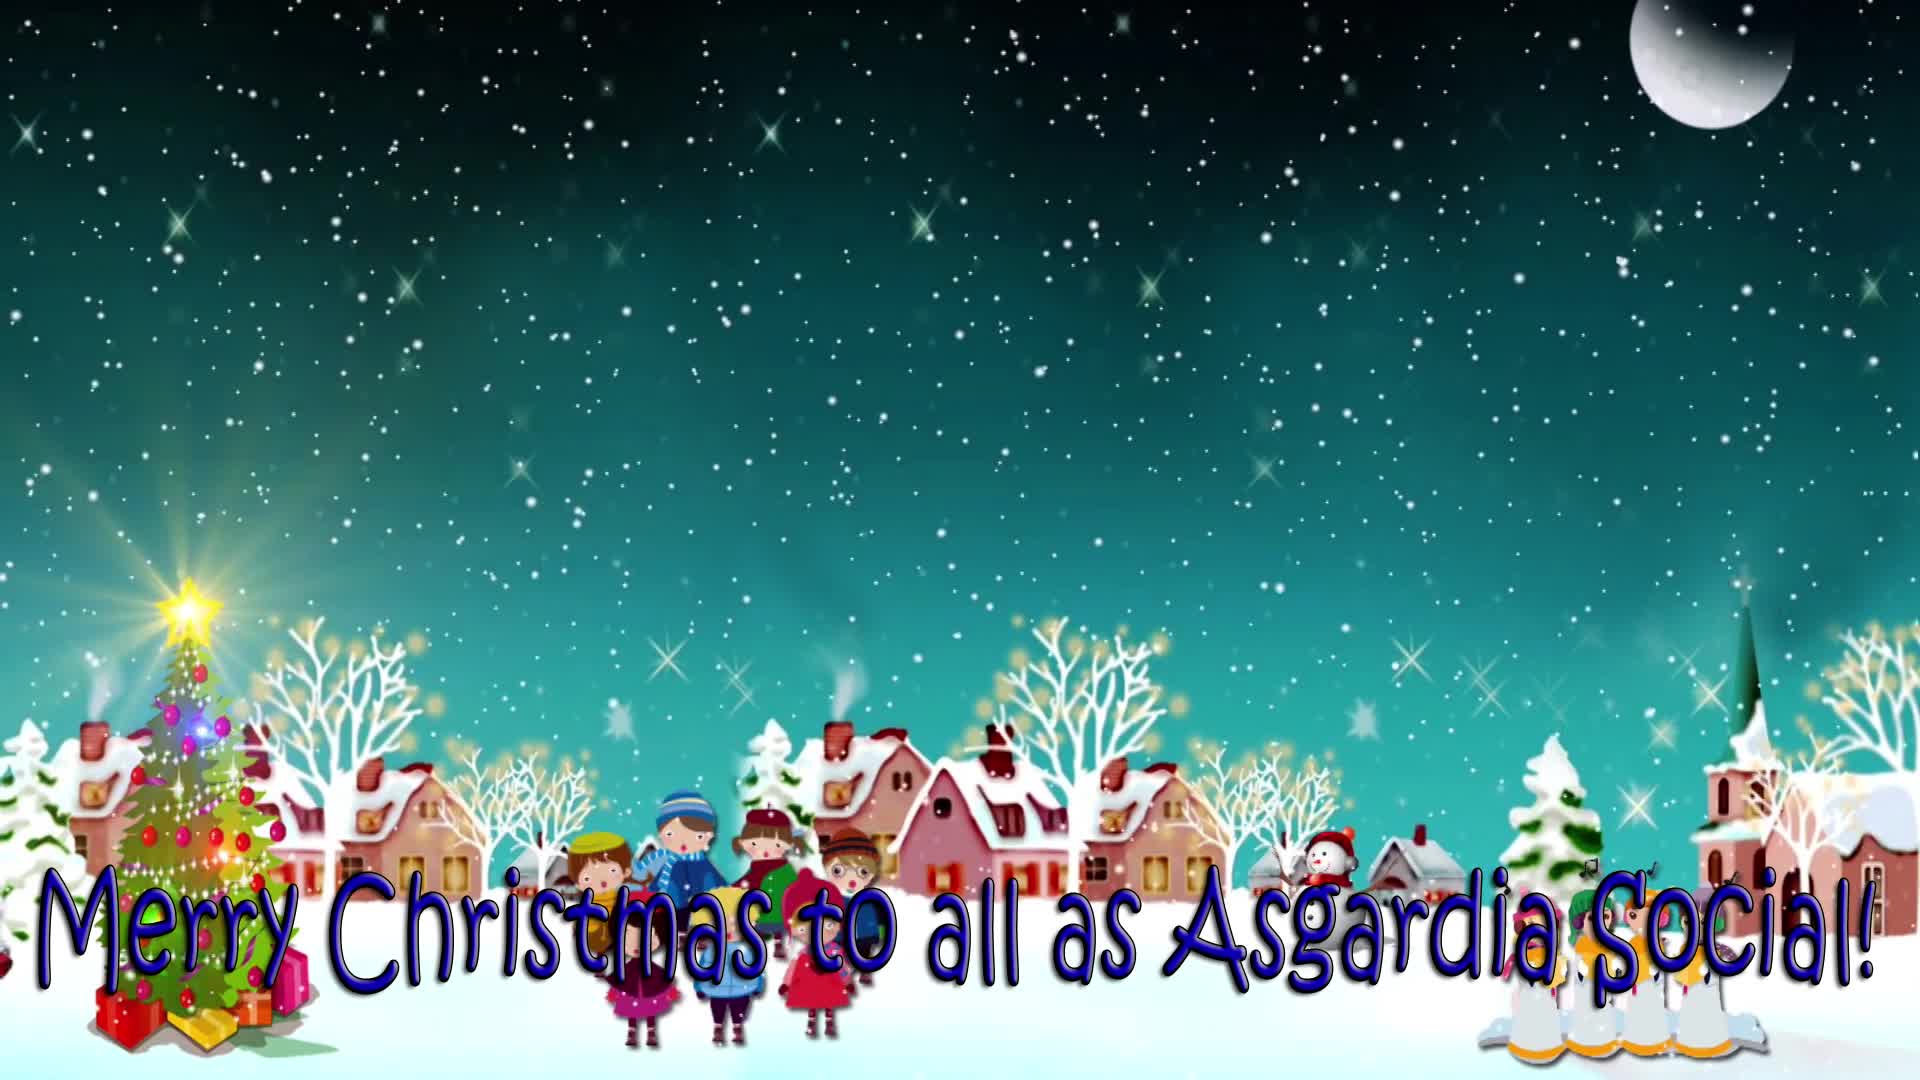 Merry Christmas from Asgardia Social!